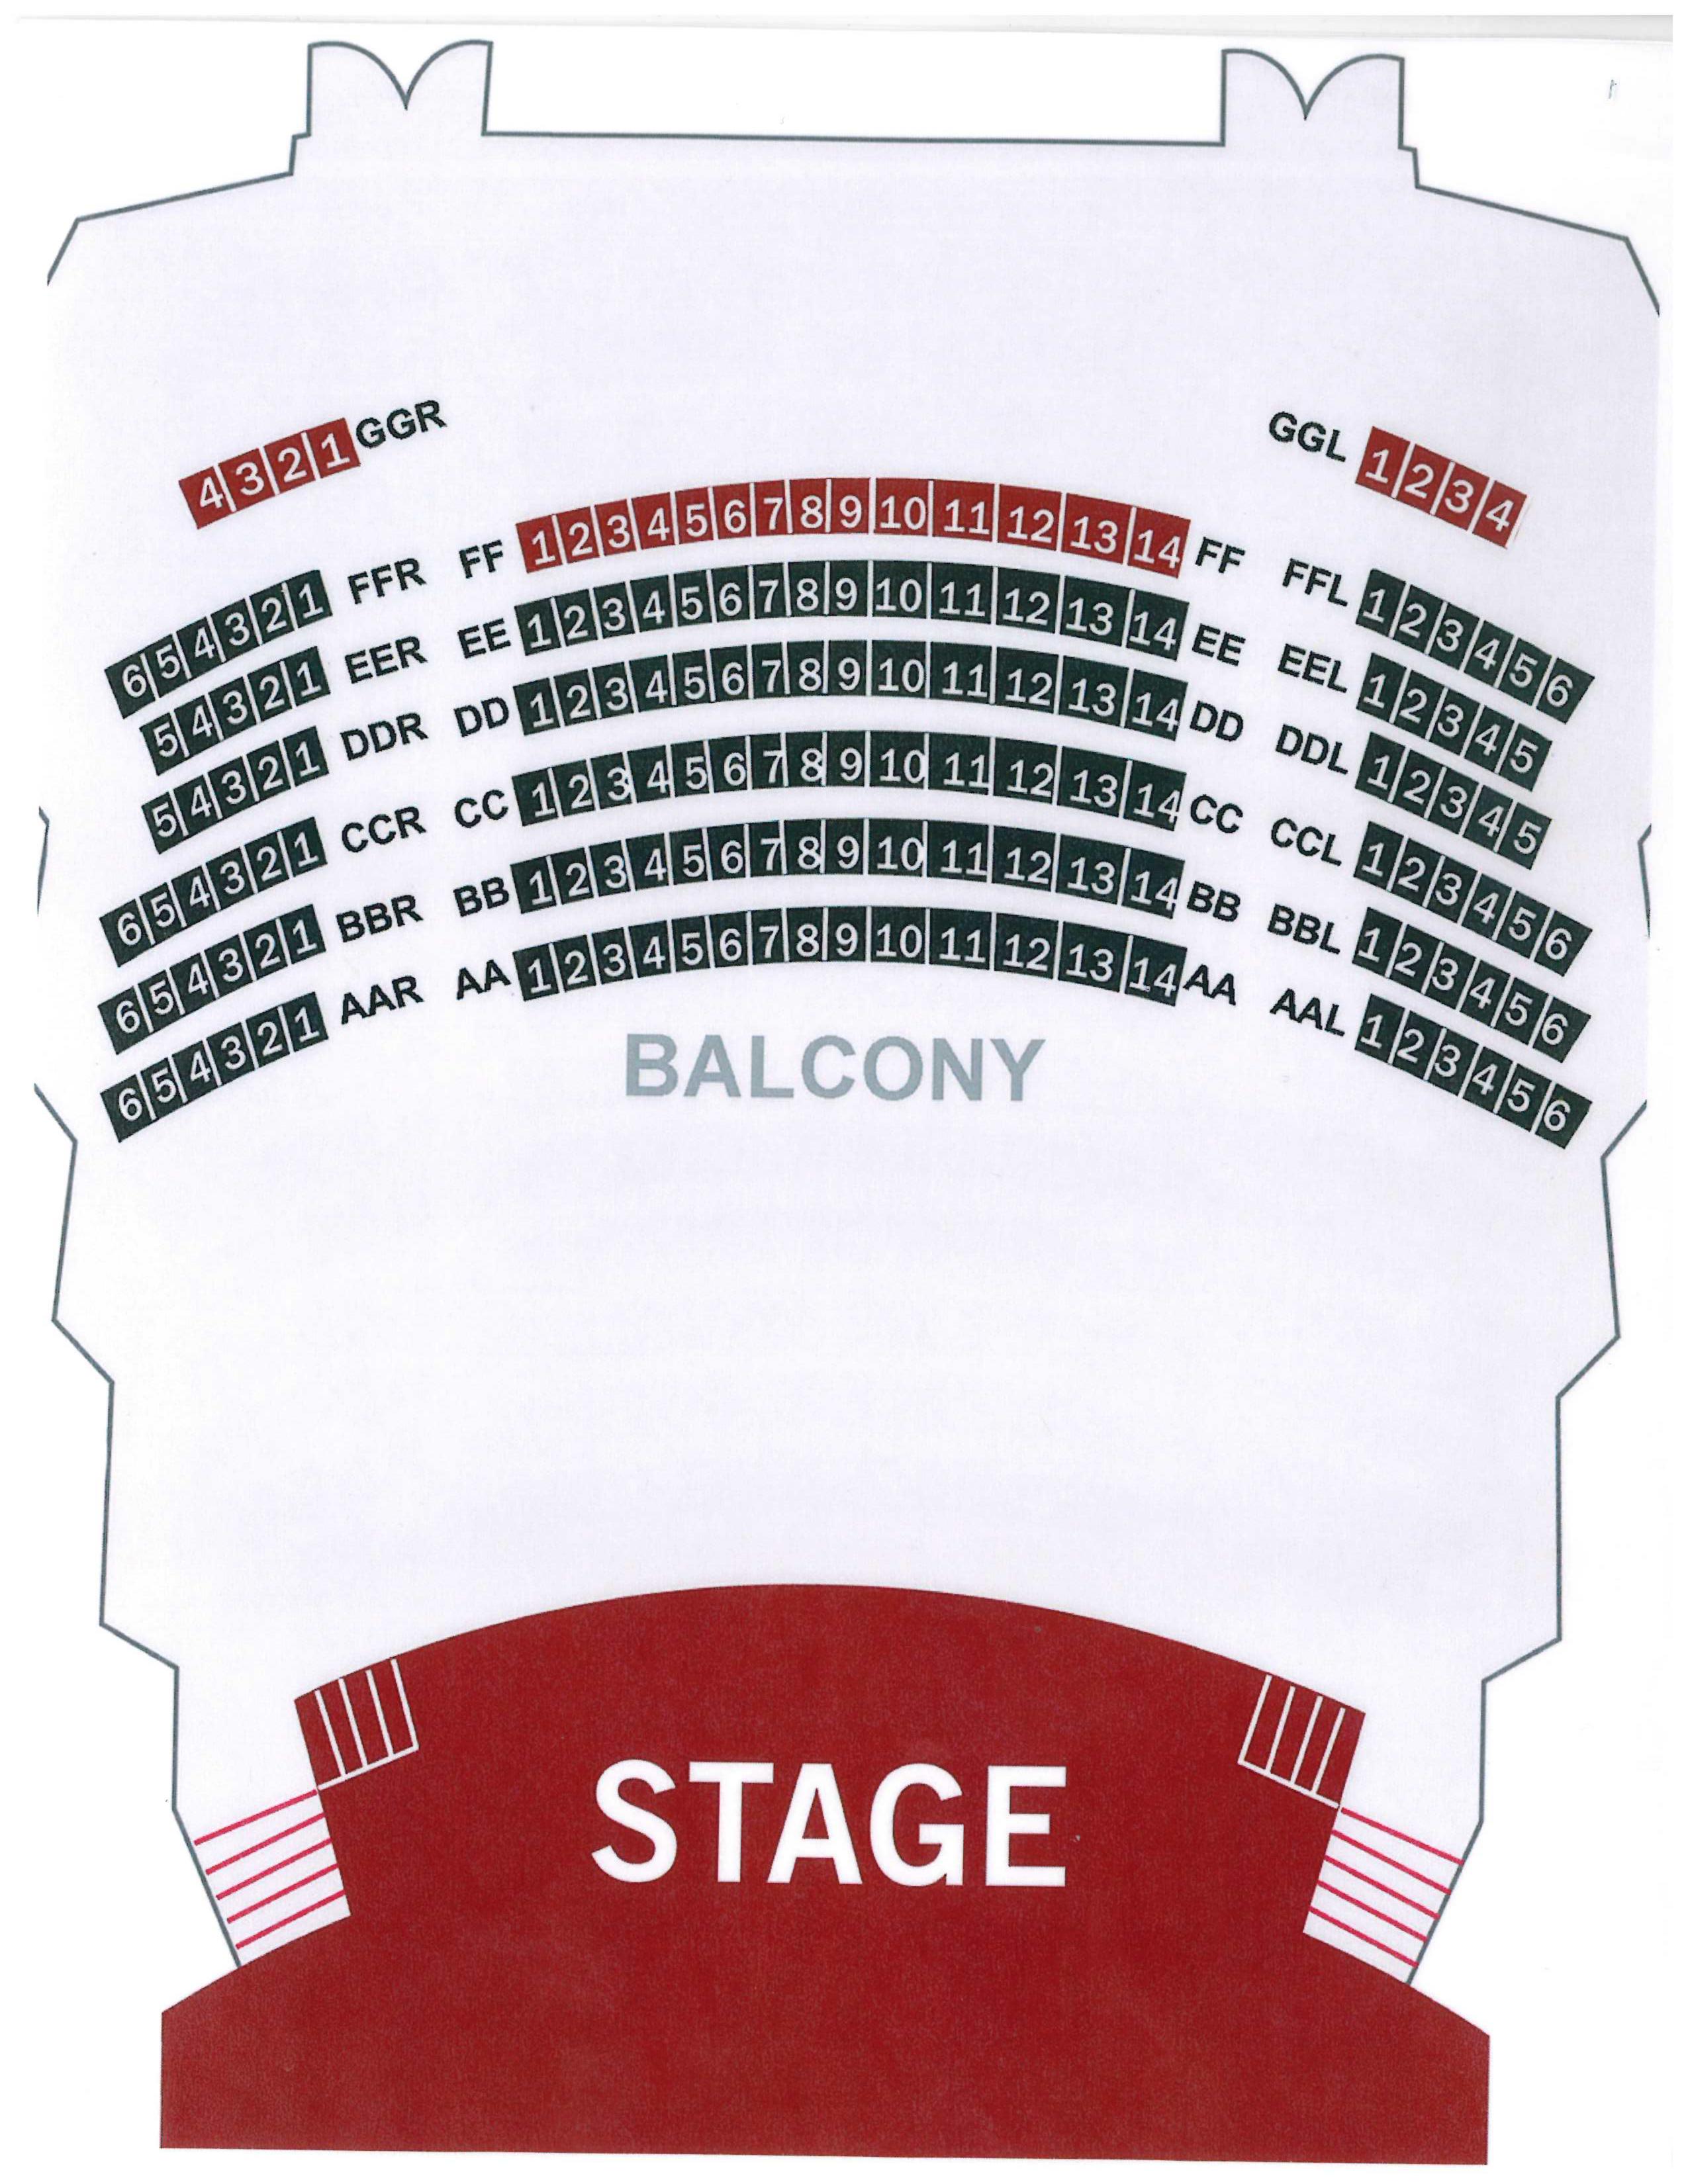 Georgia Ensemble Theatre  U2013 Seating Diagram